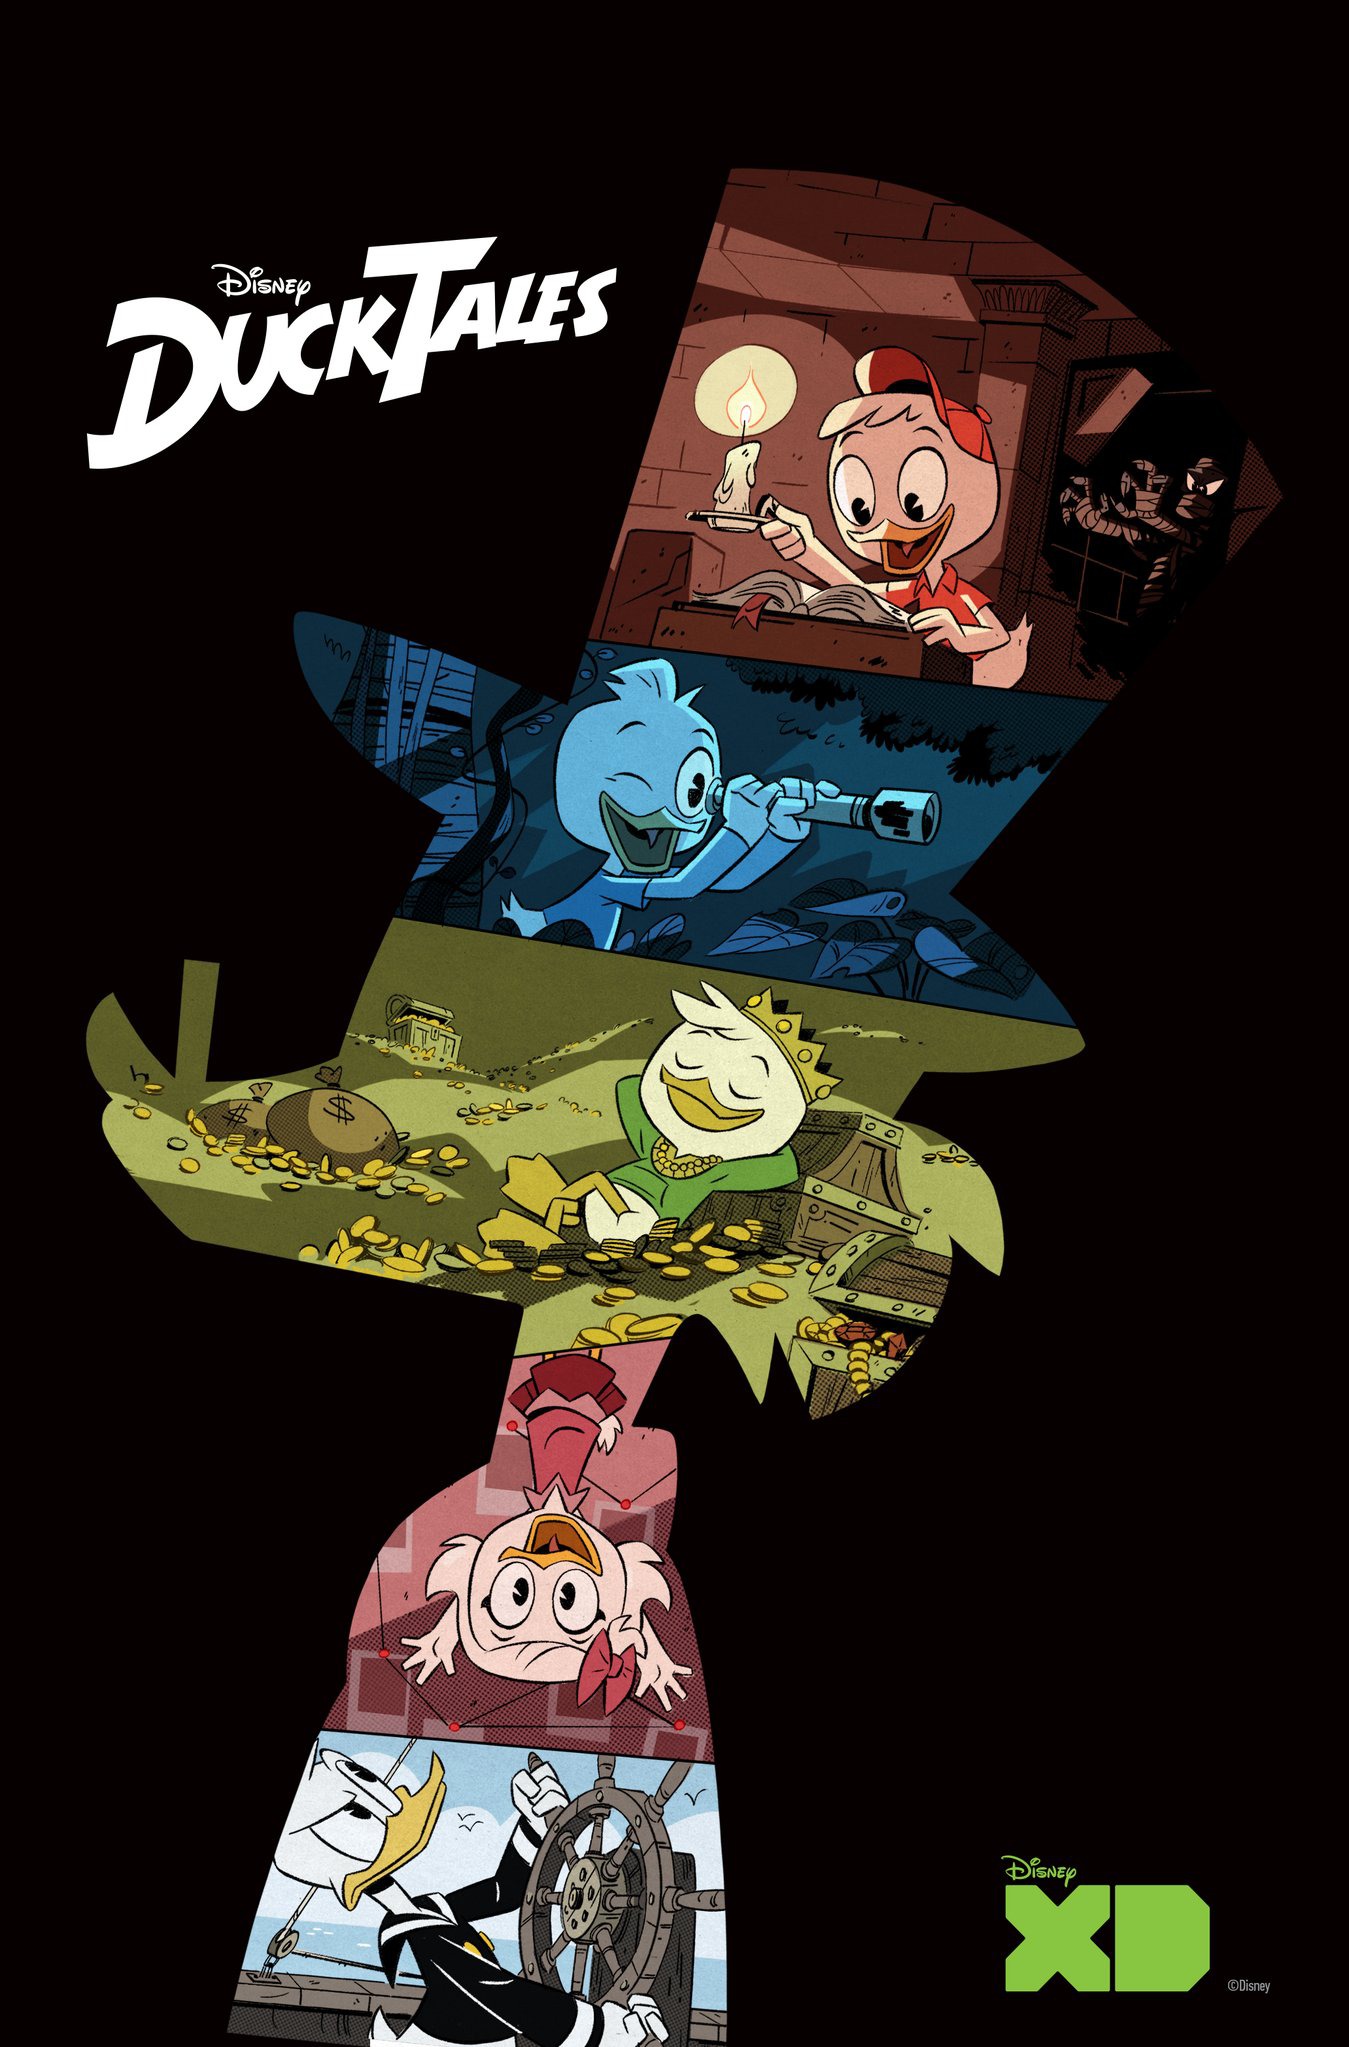 Mega Sized TV Poster Image for Ducktales (#1 of 3)